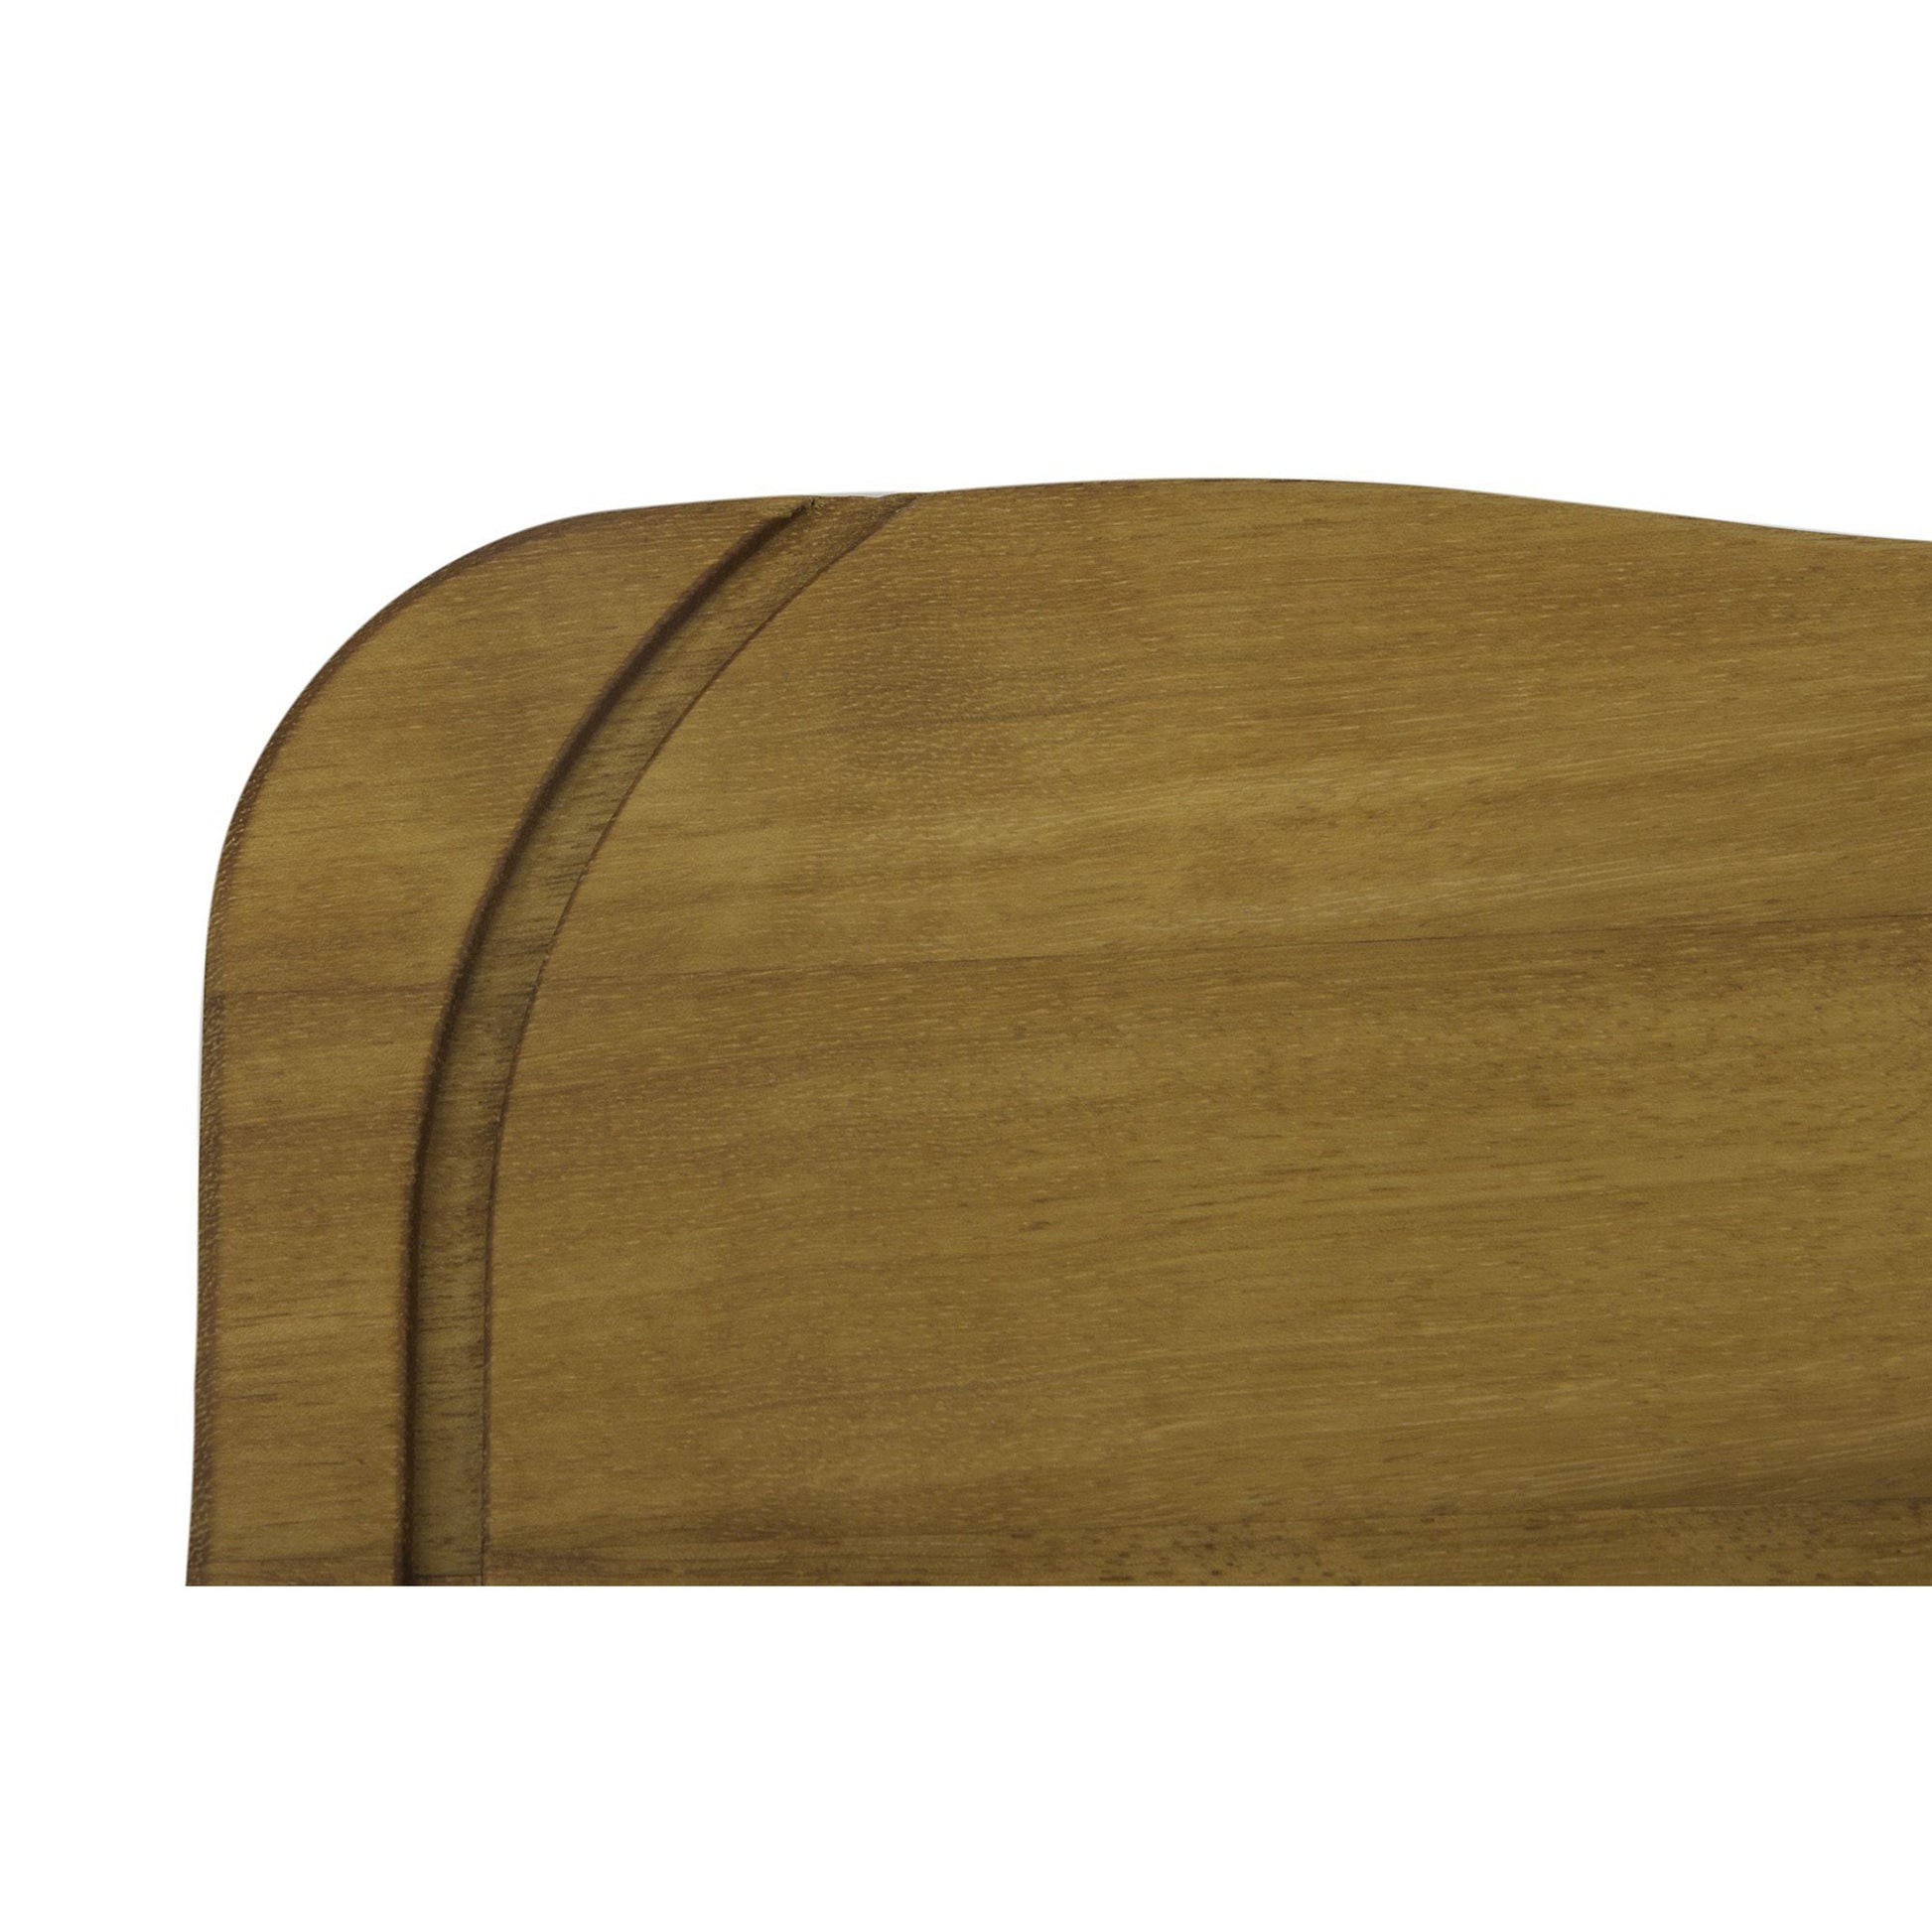 ALFI brand AB80WCB Rectangular Wood Cutting Board for AB3520DI